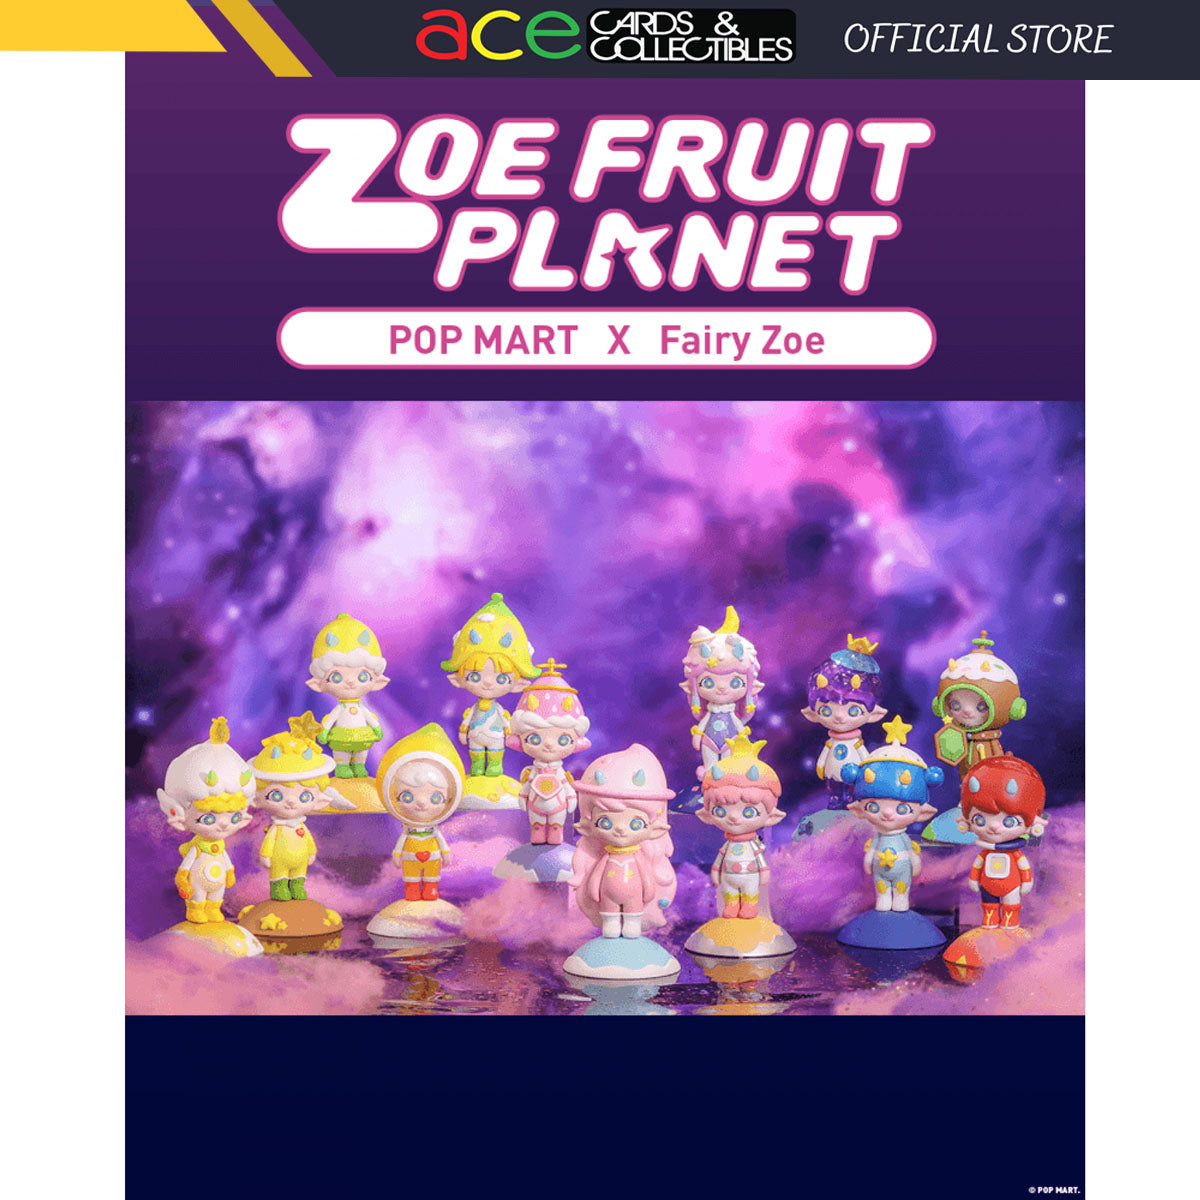 POP MART Zoe Fruit Planet Series-Single Box (Random)-Pop Mart-Ace Cards & Collectibles